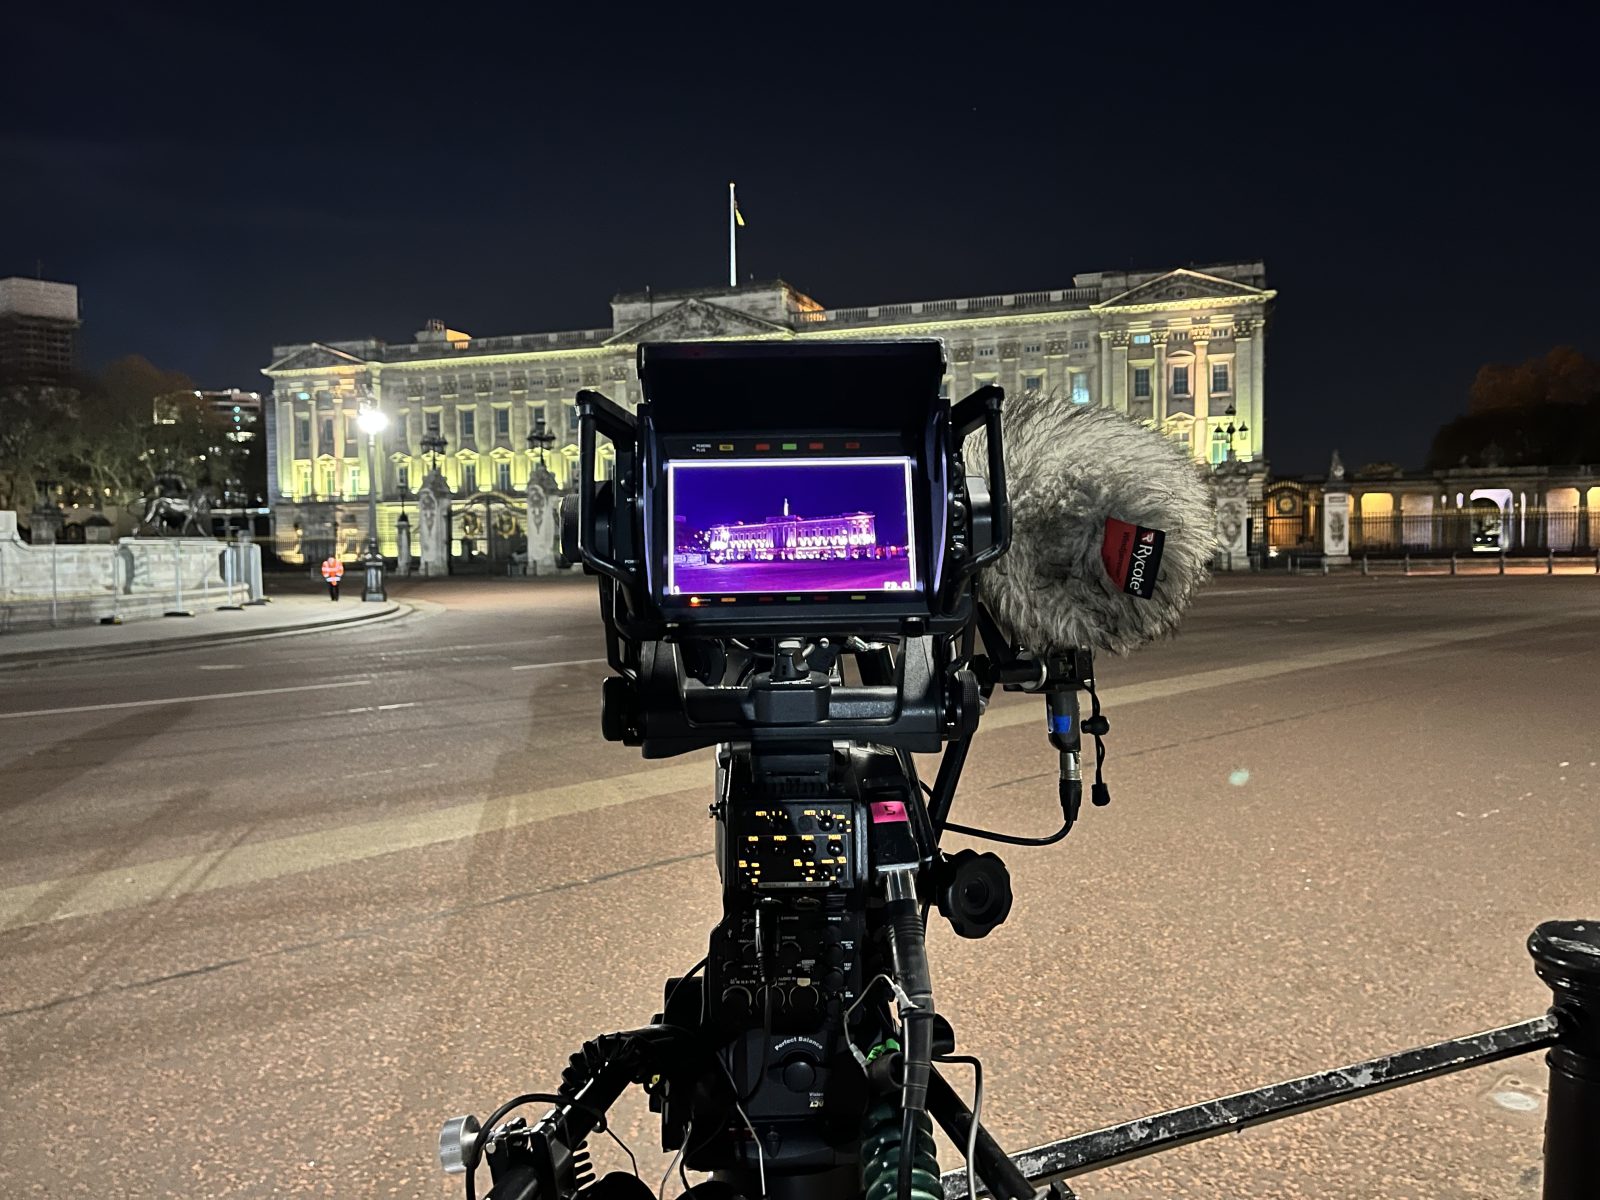 Camera filming Buckingham palace